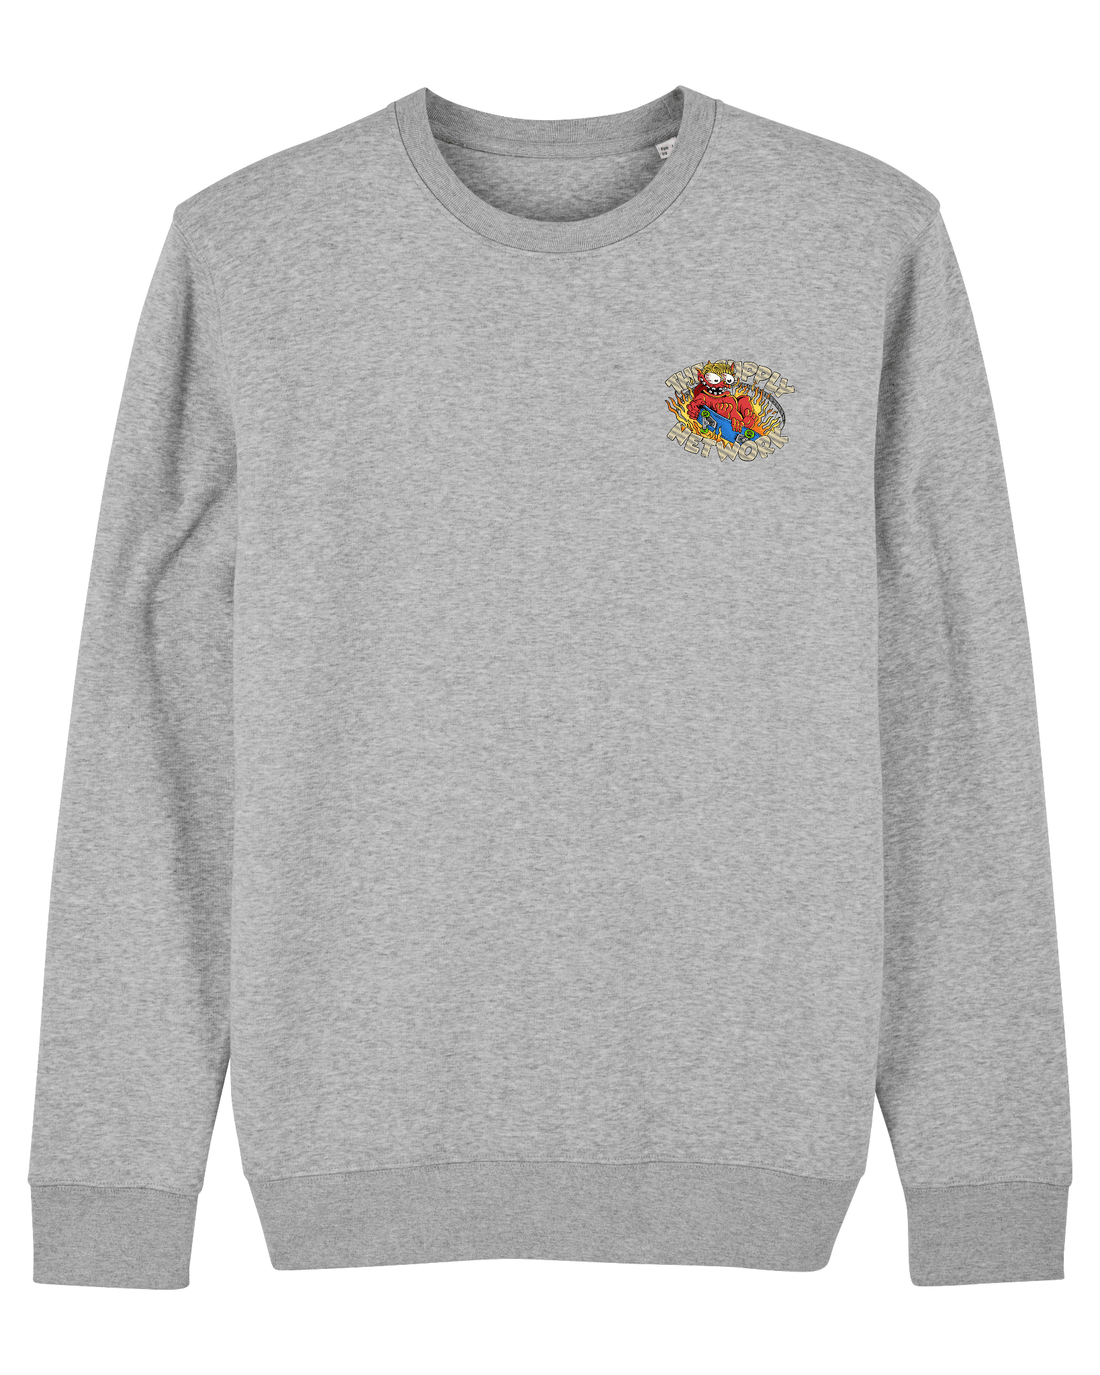 Grey Skater Sweatshirt, Devil Baby Front Print